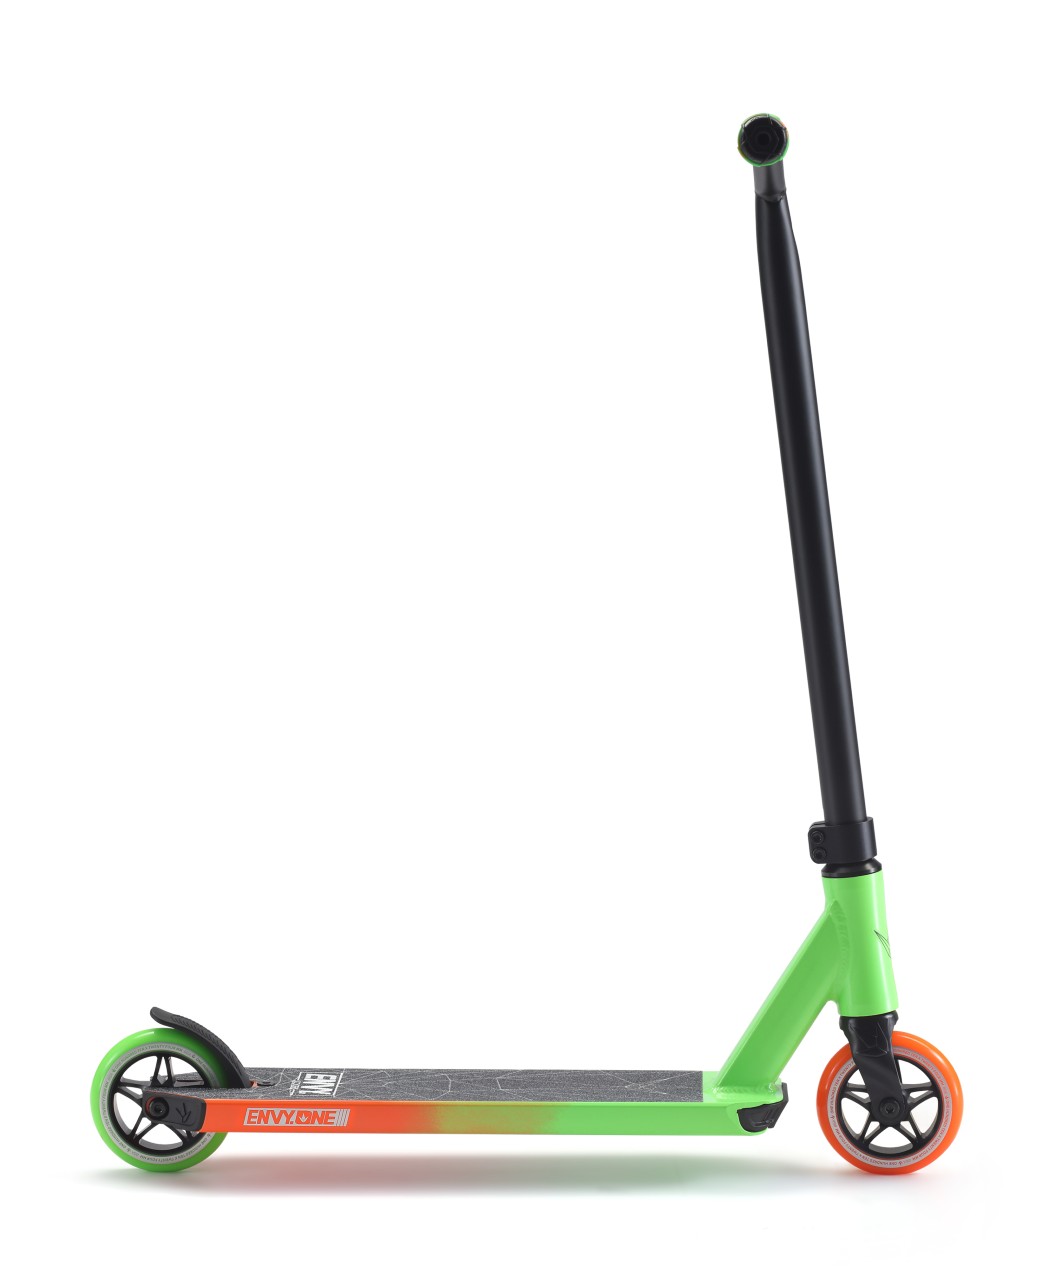 Freestyle Scooter / Metallic Green